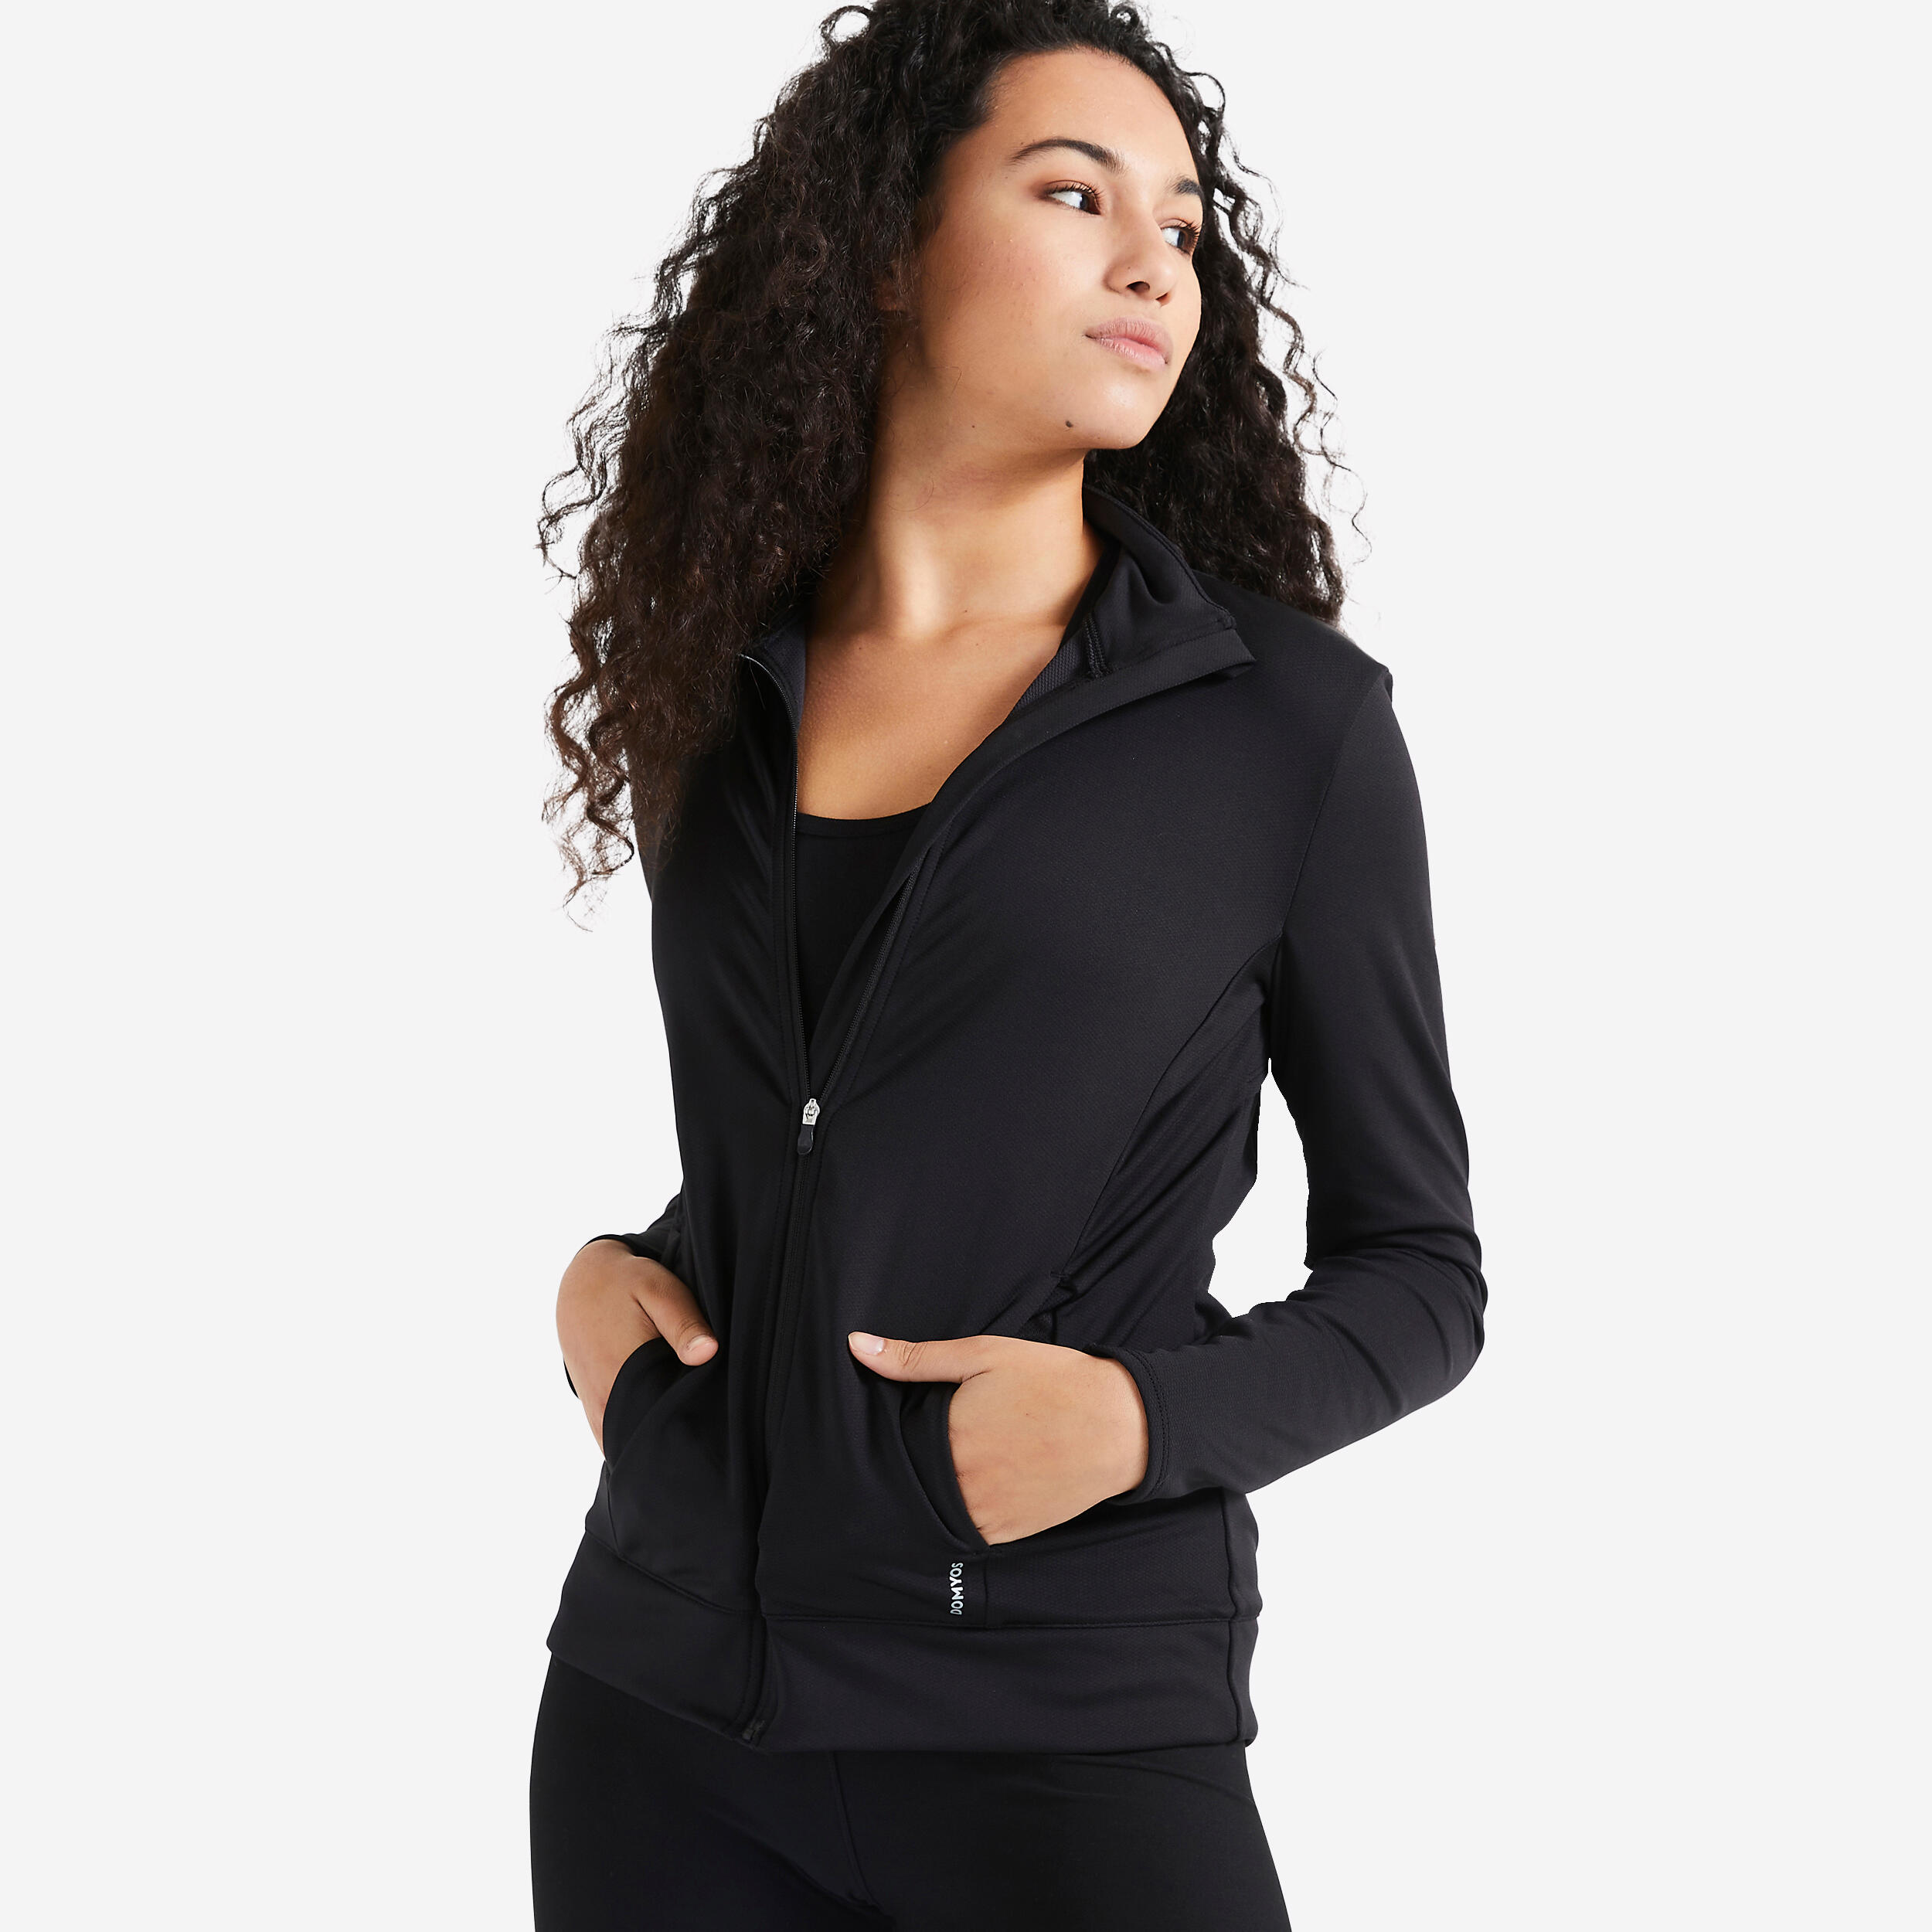 DOMYOS Women's Straight-Cut Fitness Cardio Jacket - Black